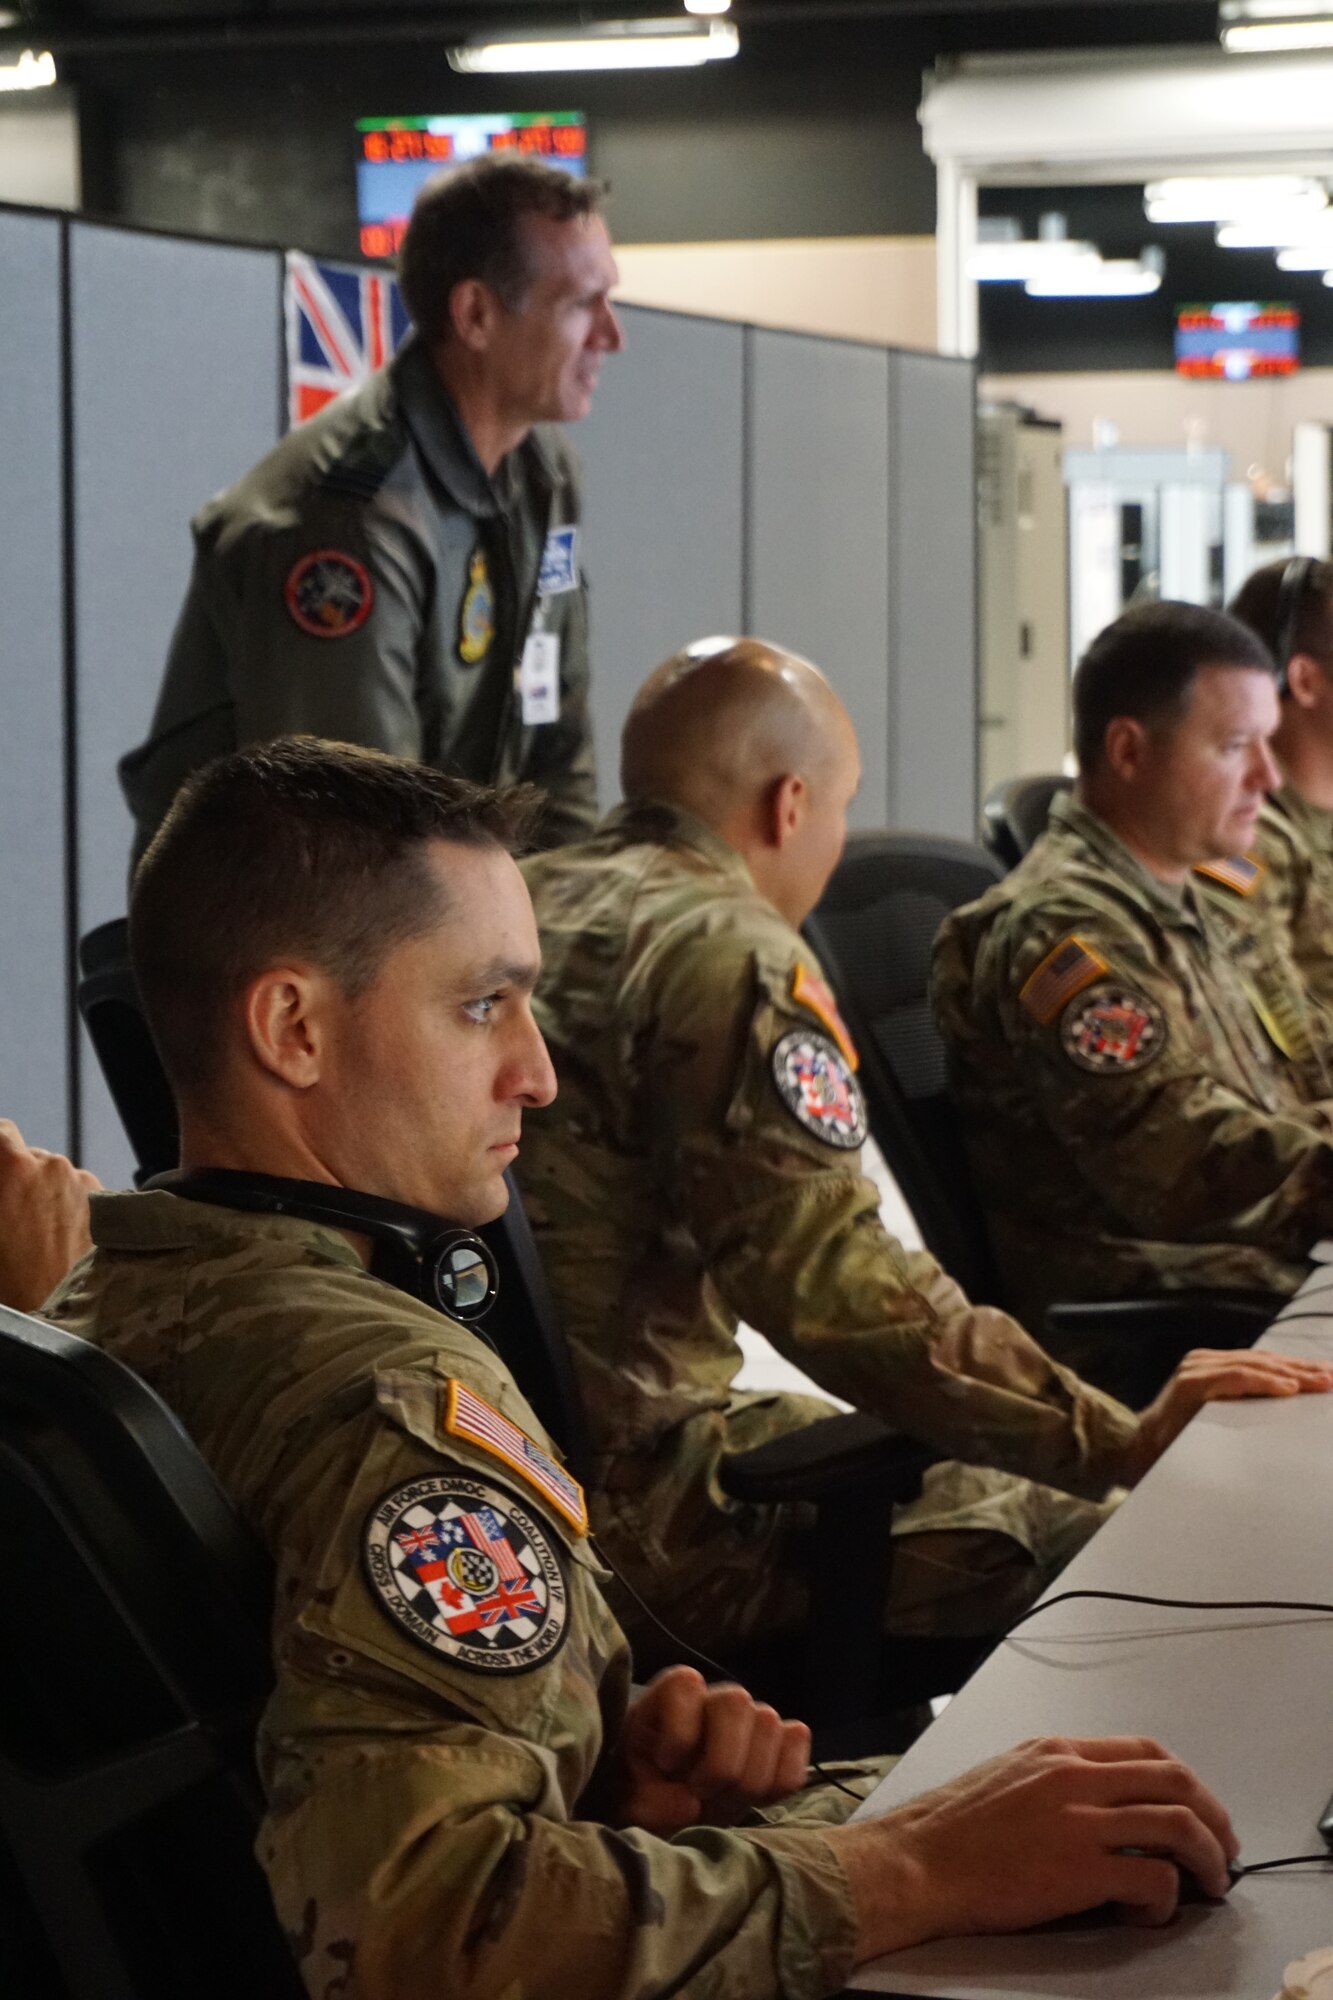 uniformed military members work at computers